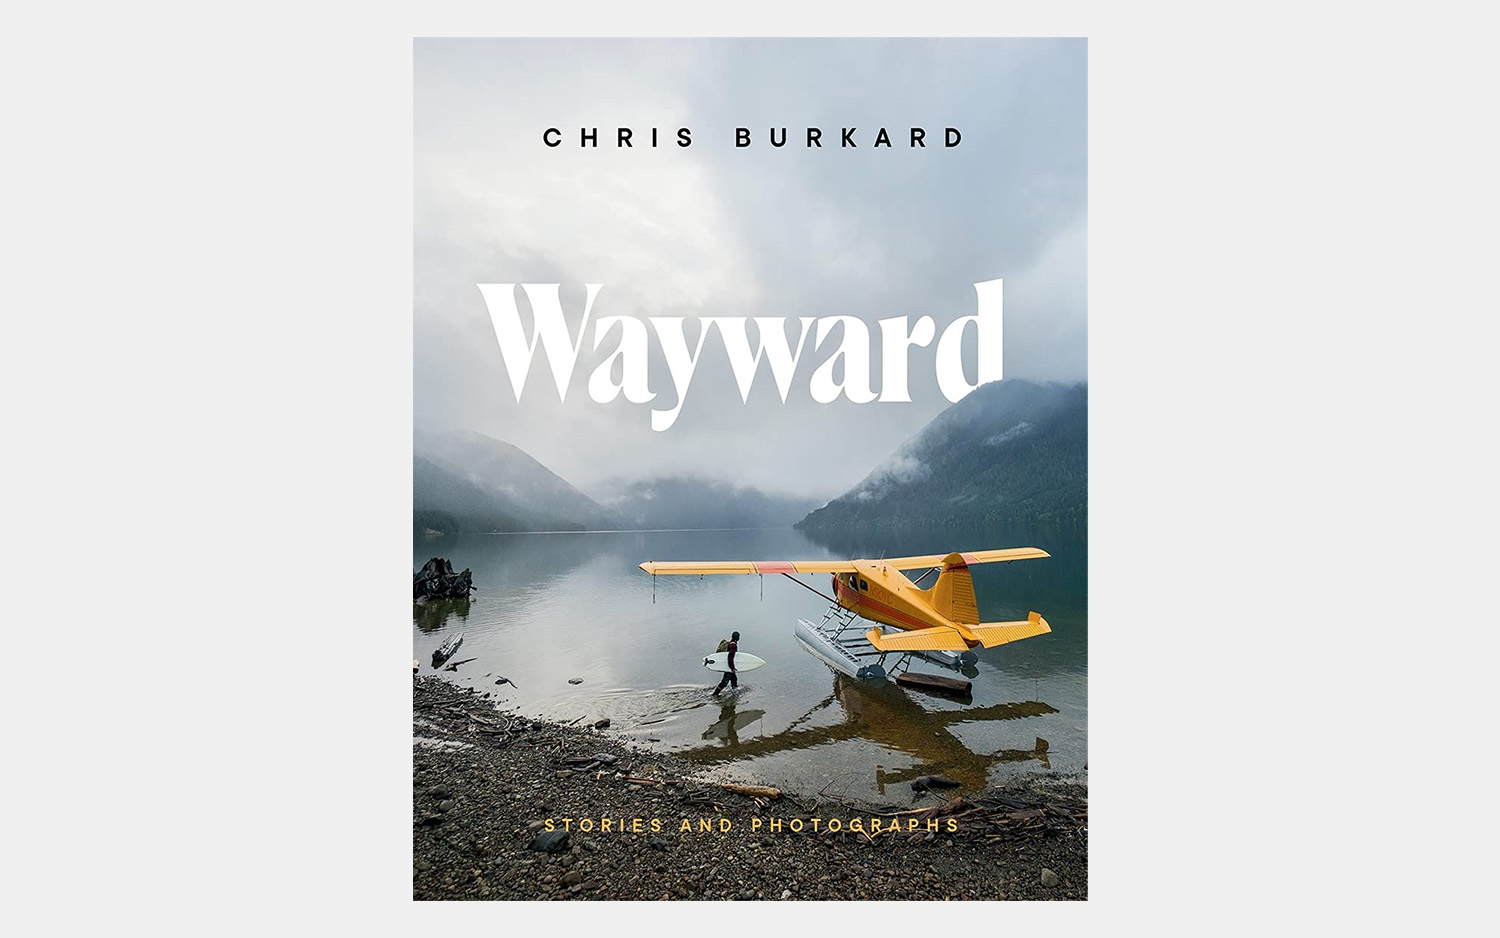 Wayward Stories And Photographs By Chris Burkard